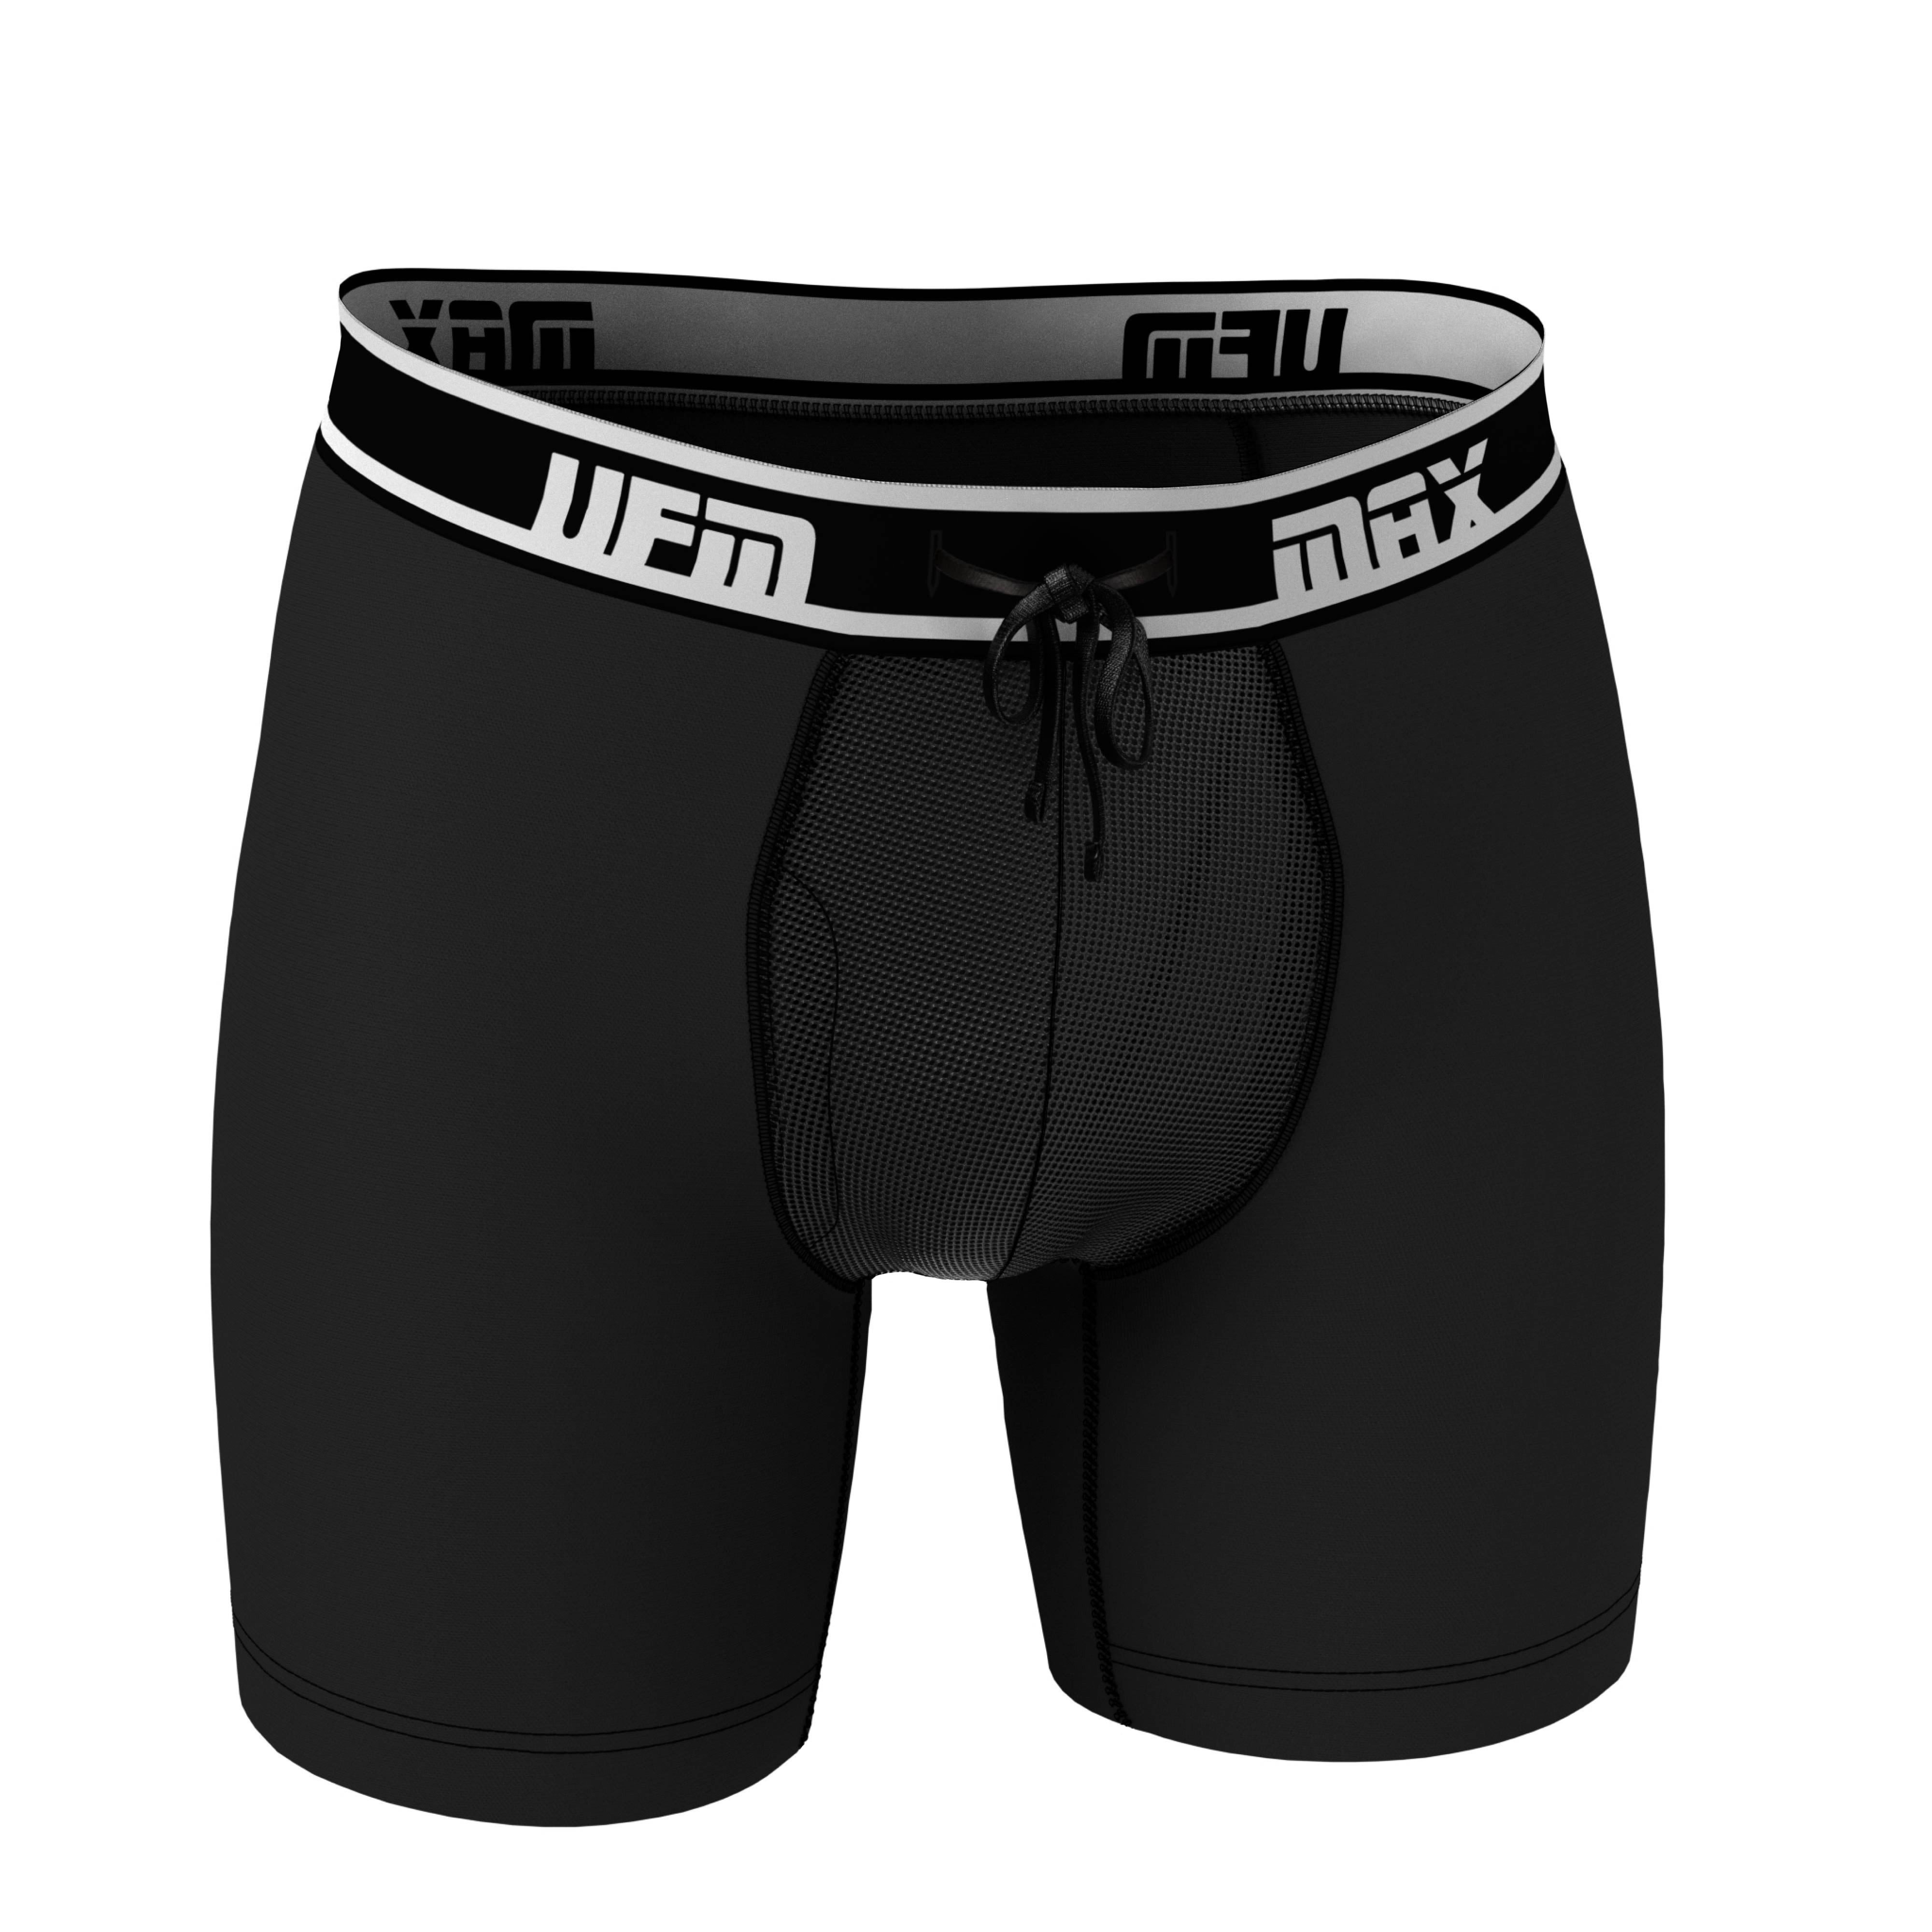 Men's Trunks Boxer Briefs Adjustable Low Rise Briefs Bamboo Underpants 5XL